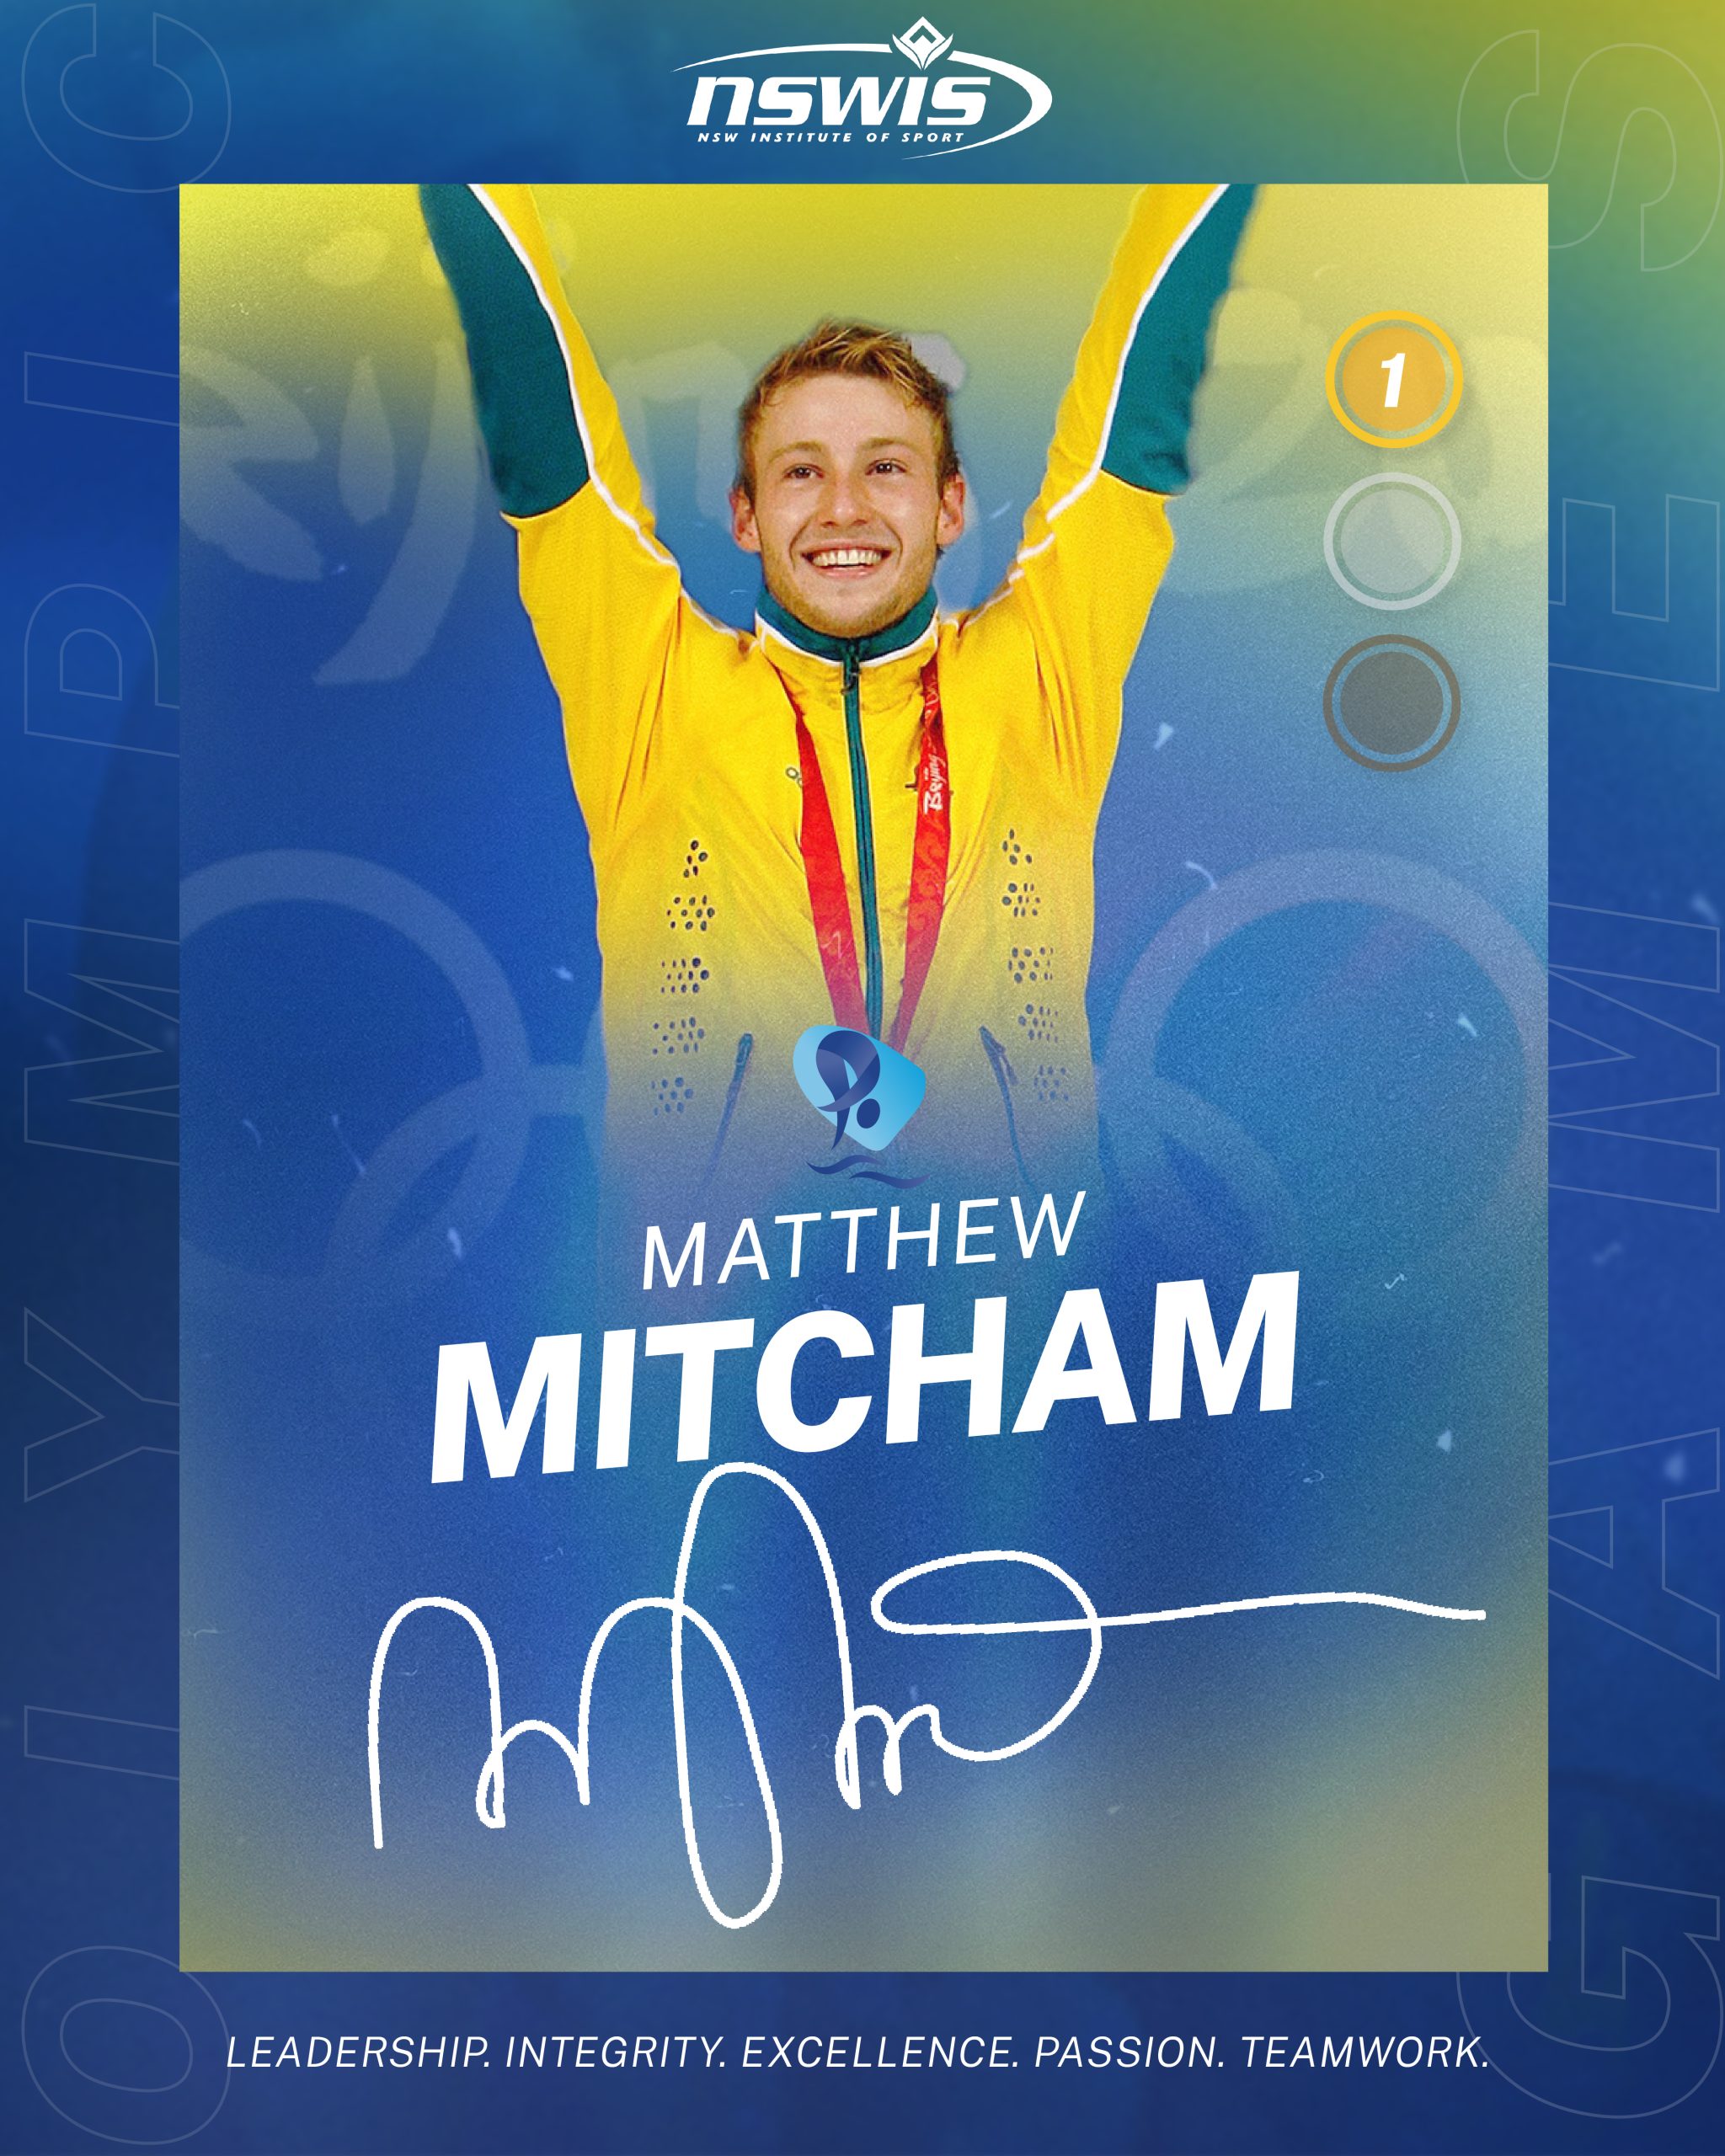 Matthew Mitcham Most Outstanding Card